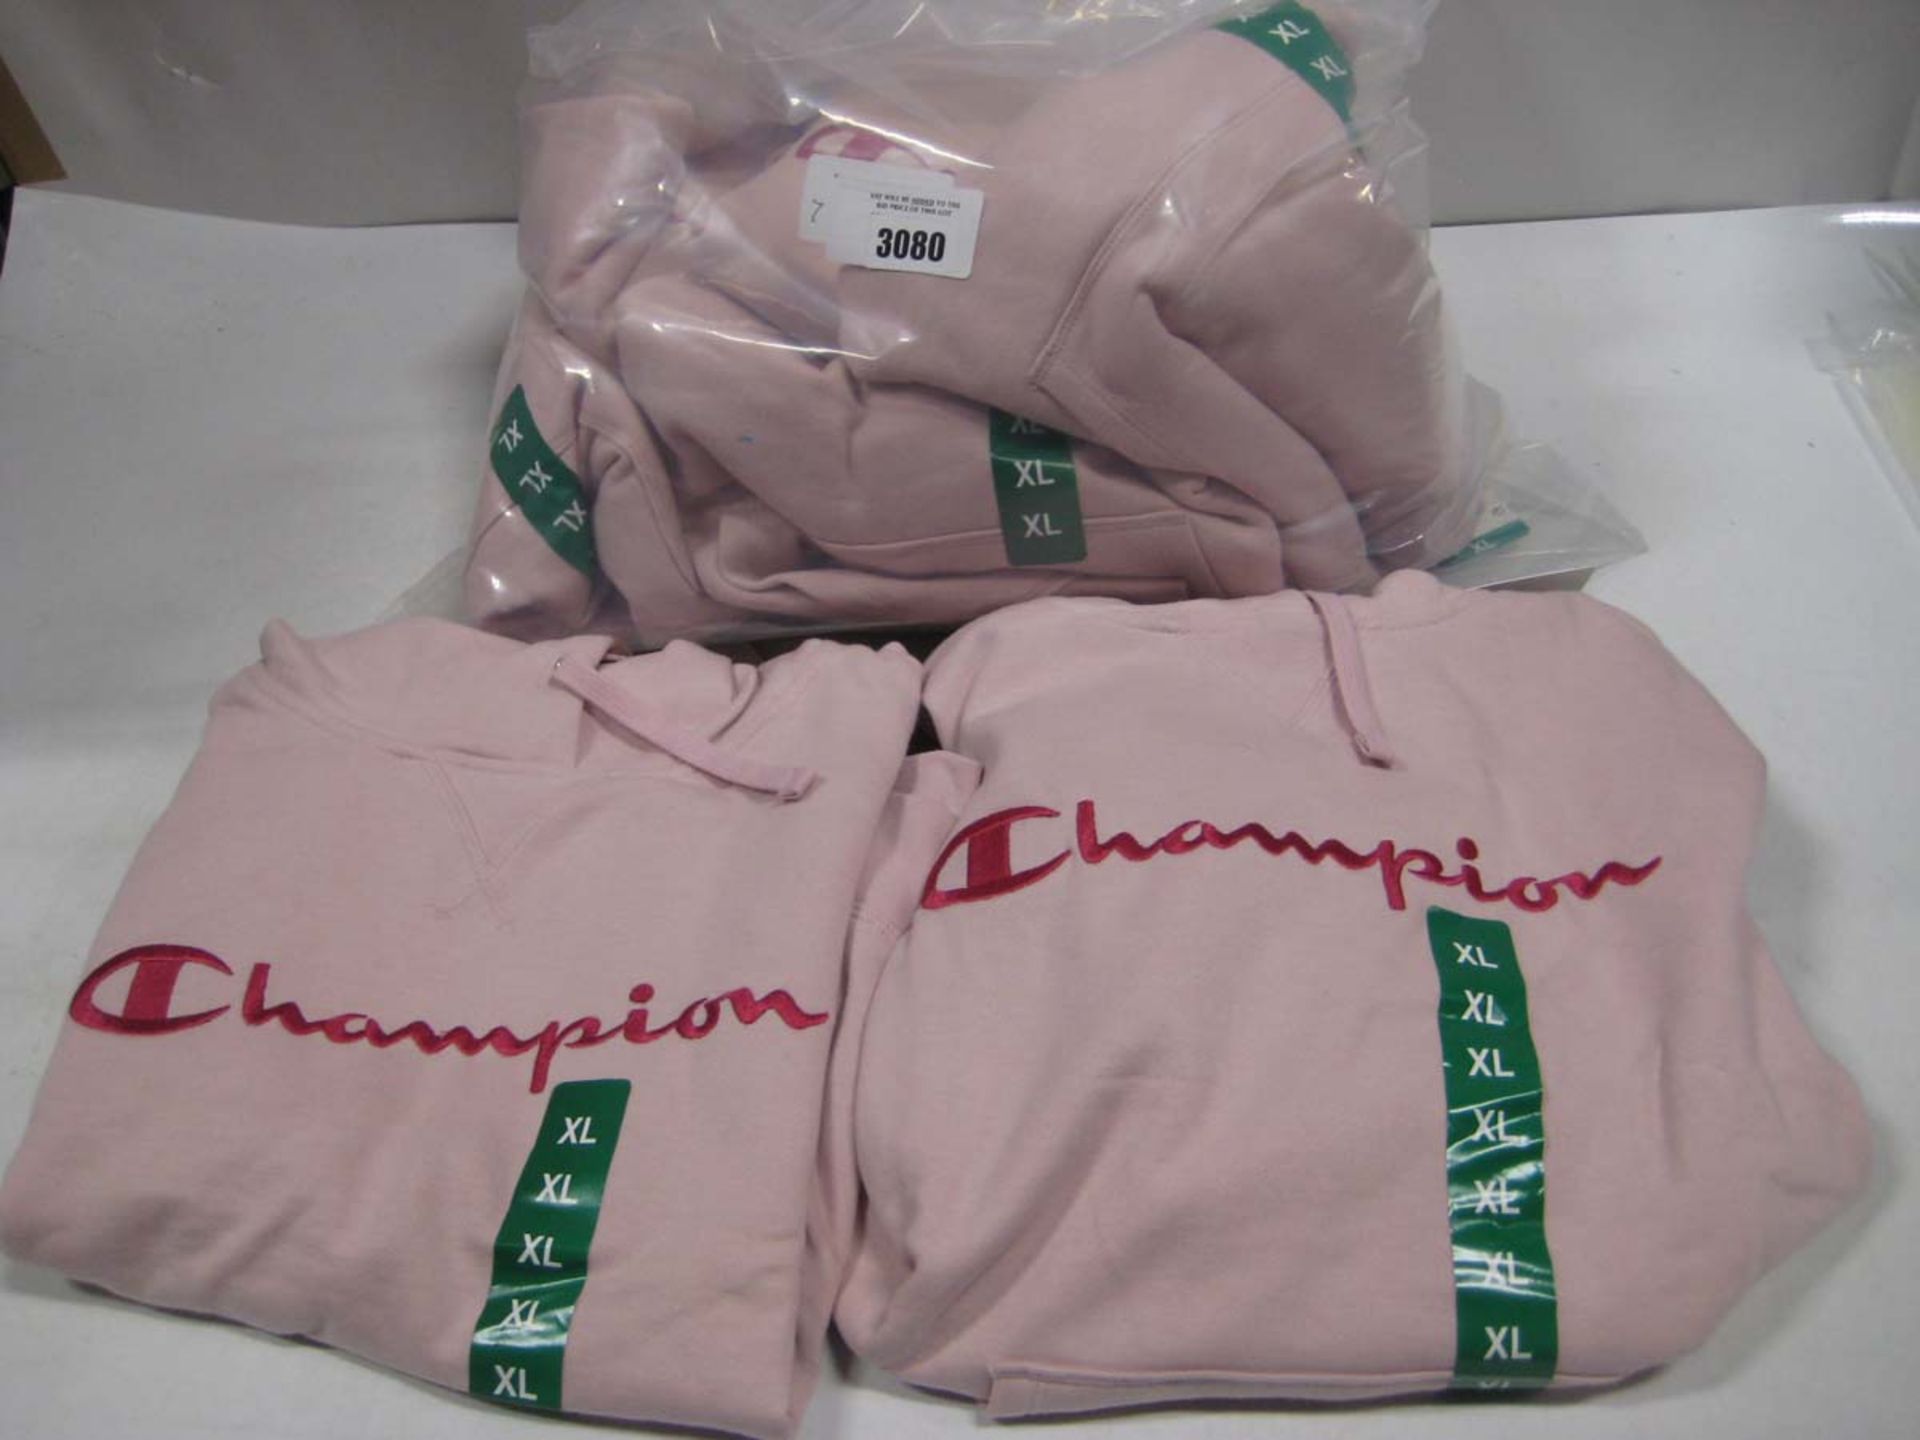 Bag containing 7 Champion ladies hoodies in pink